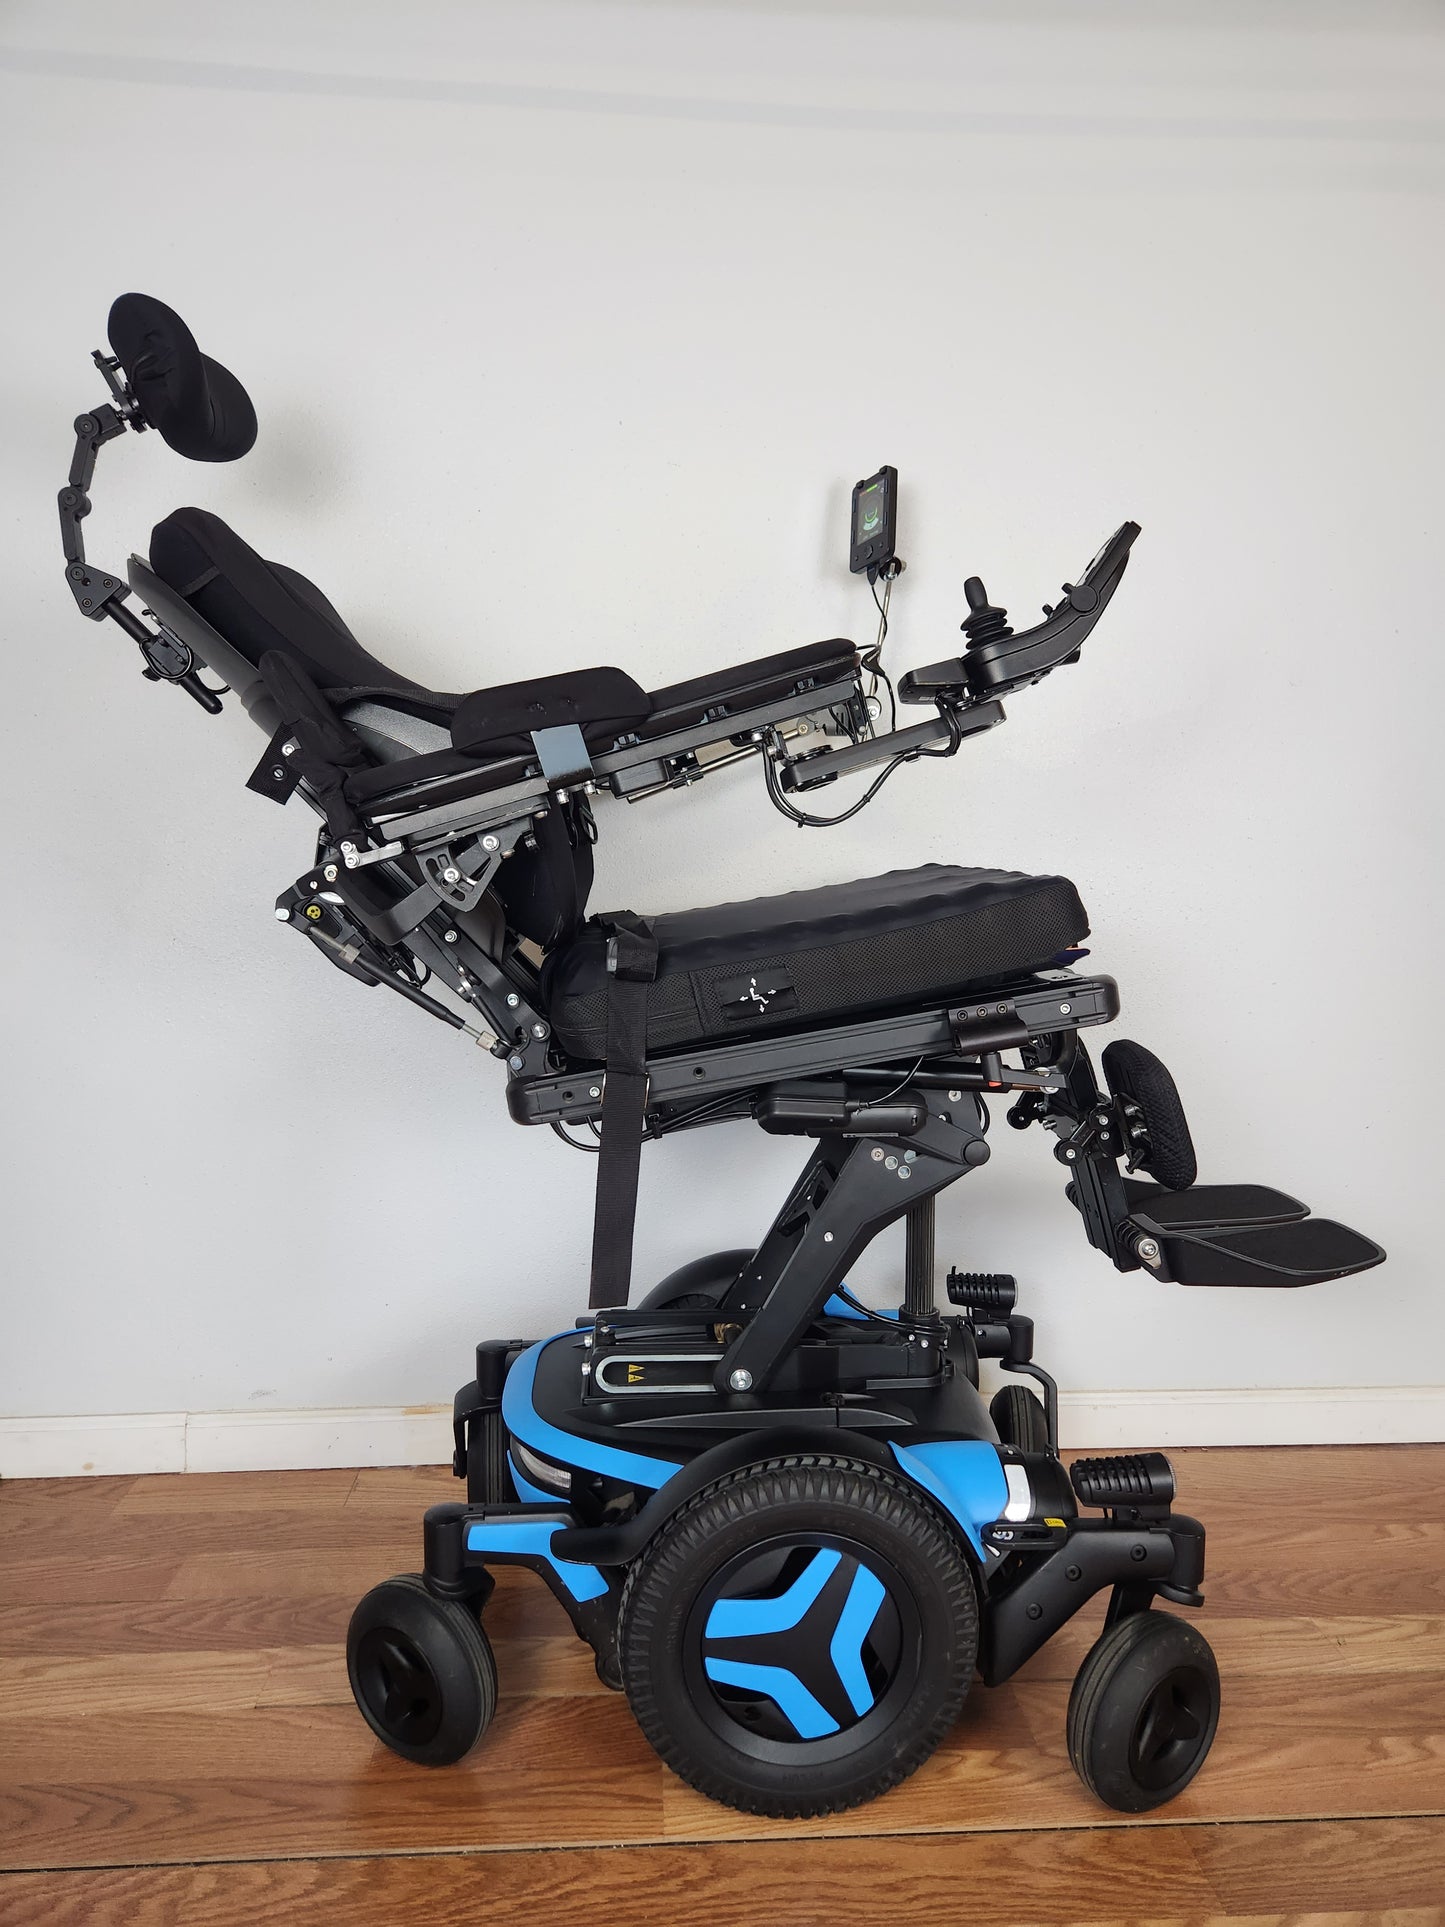 2020 Permobil M3 Rehab Powerchair PRE-OWNED